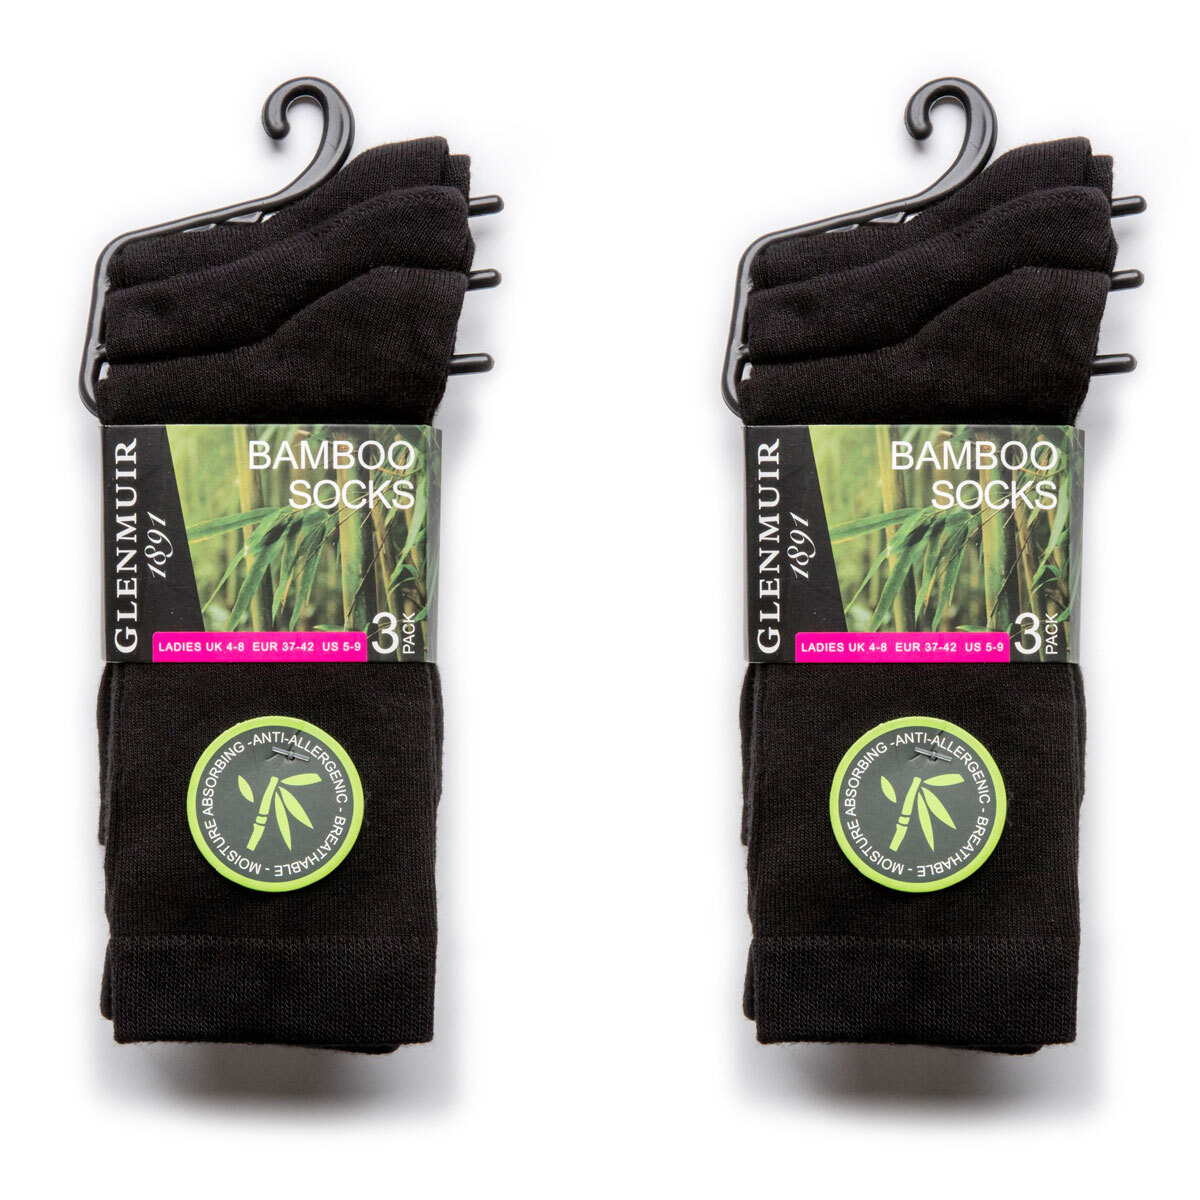 Glenmuir Women's 2 x 3 Pack Bamboo Socks in Black, Size 4-8